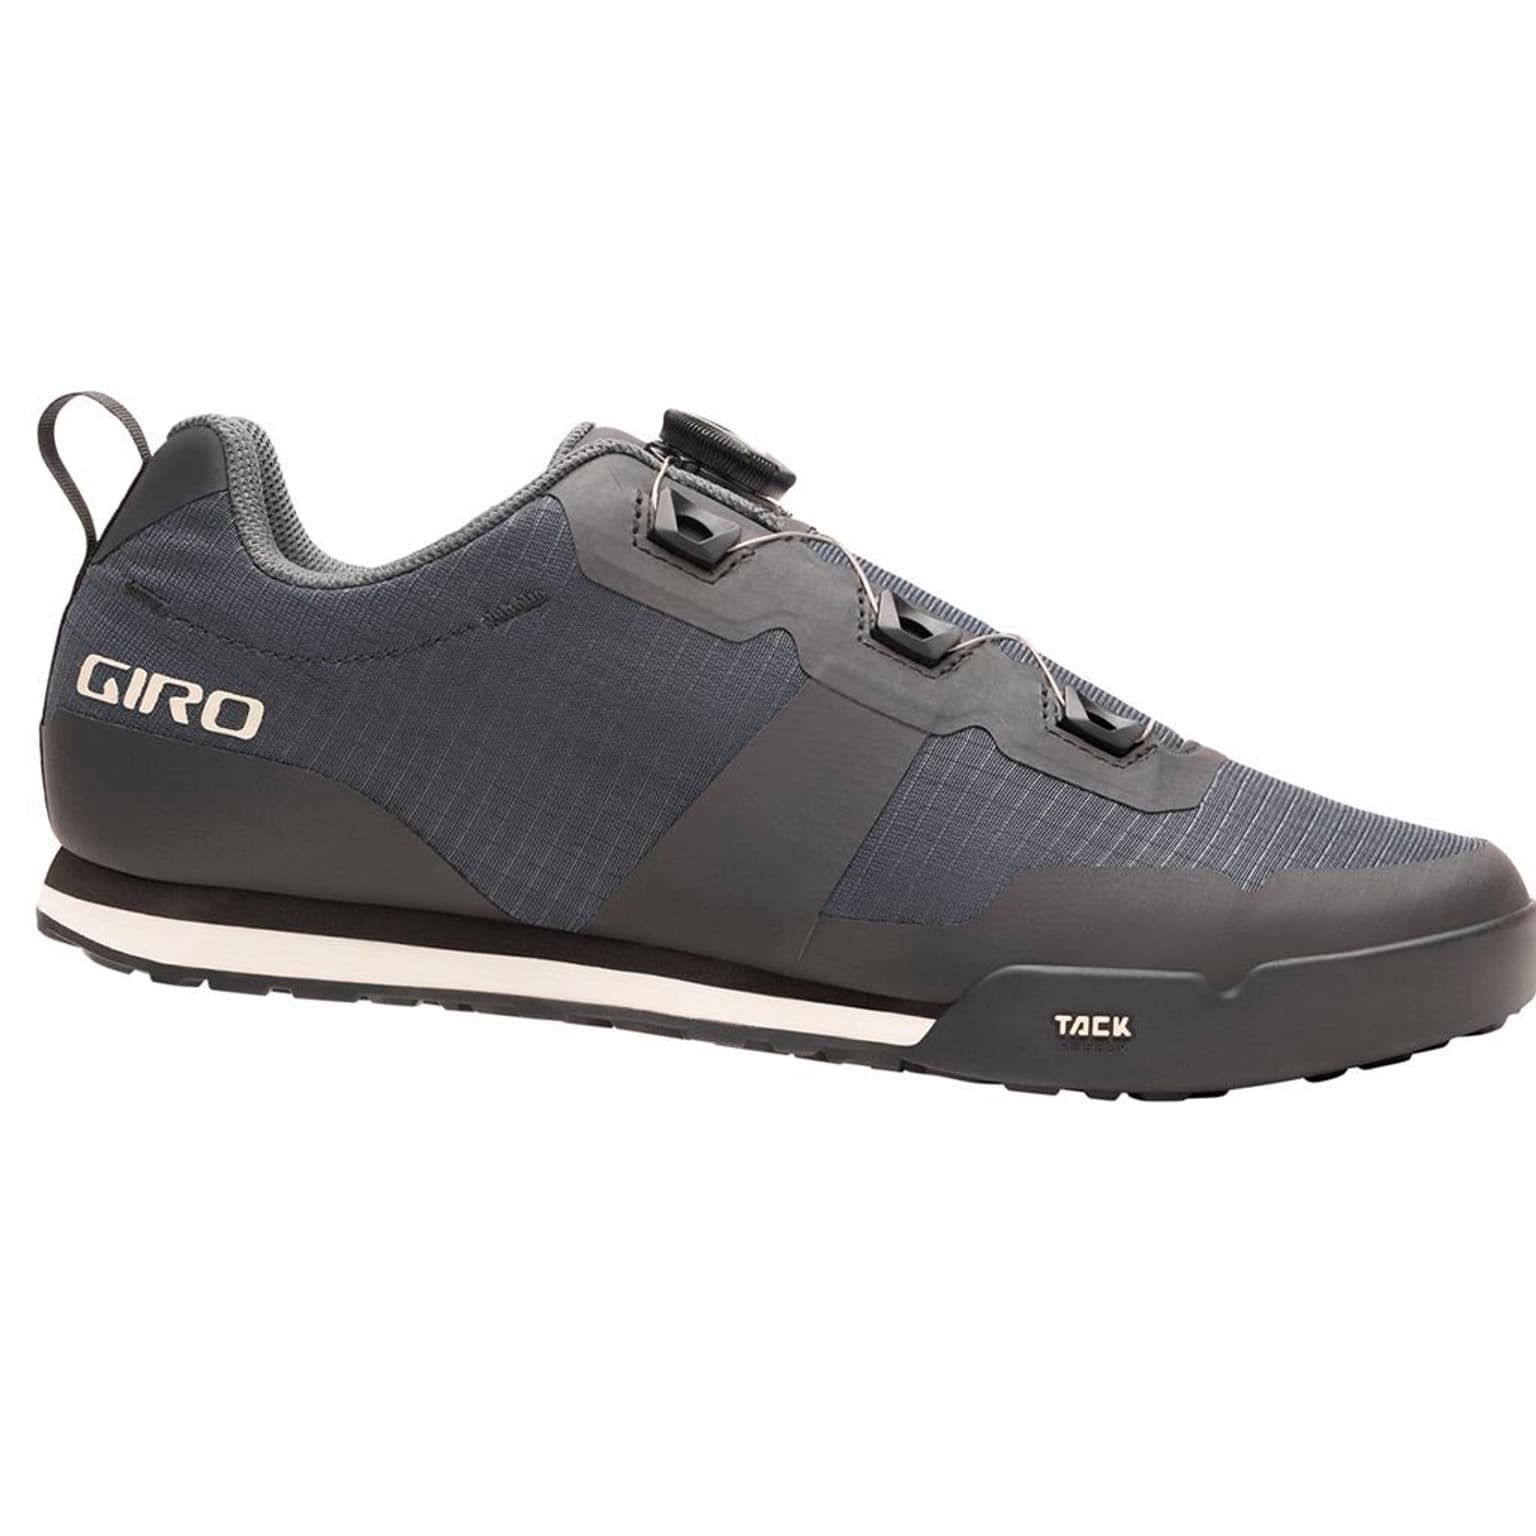 Giro Giro Tracker W Shoe Scarpe da ciclismo antracite 1